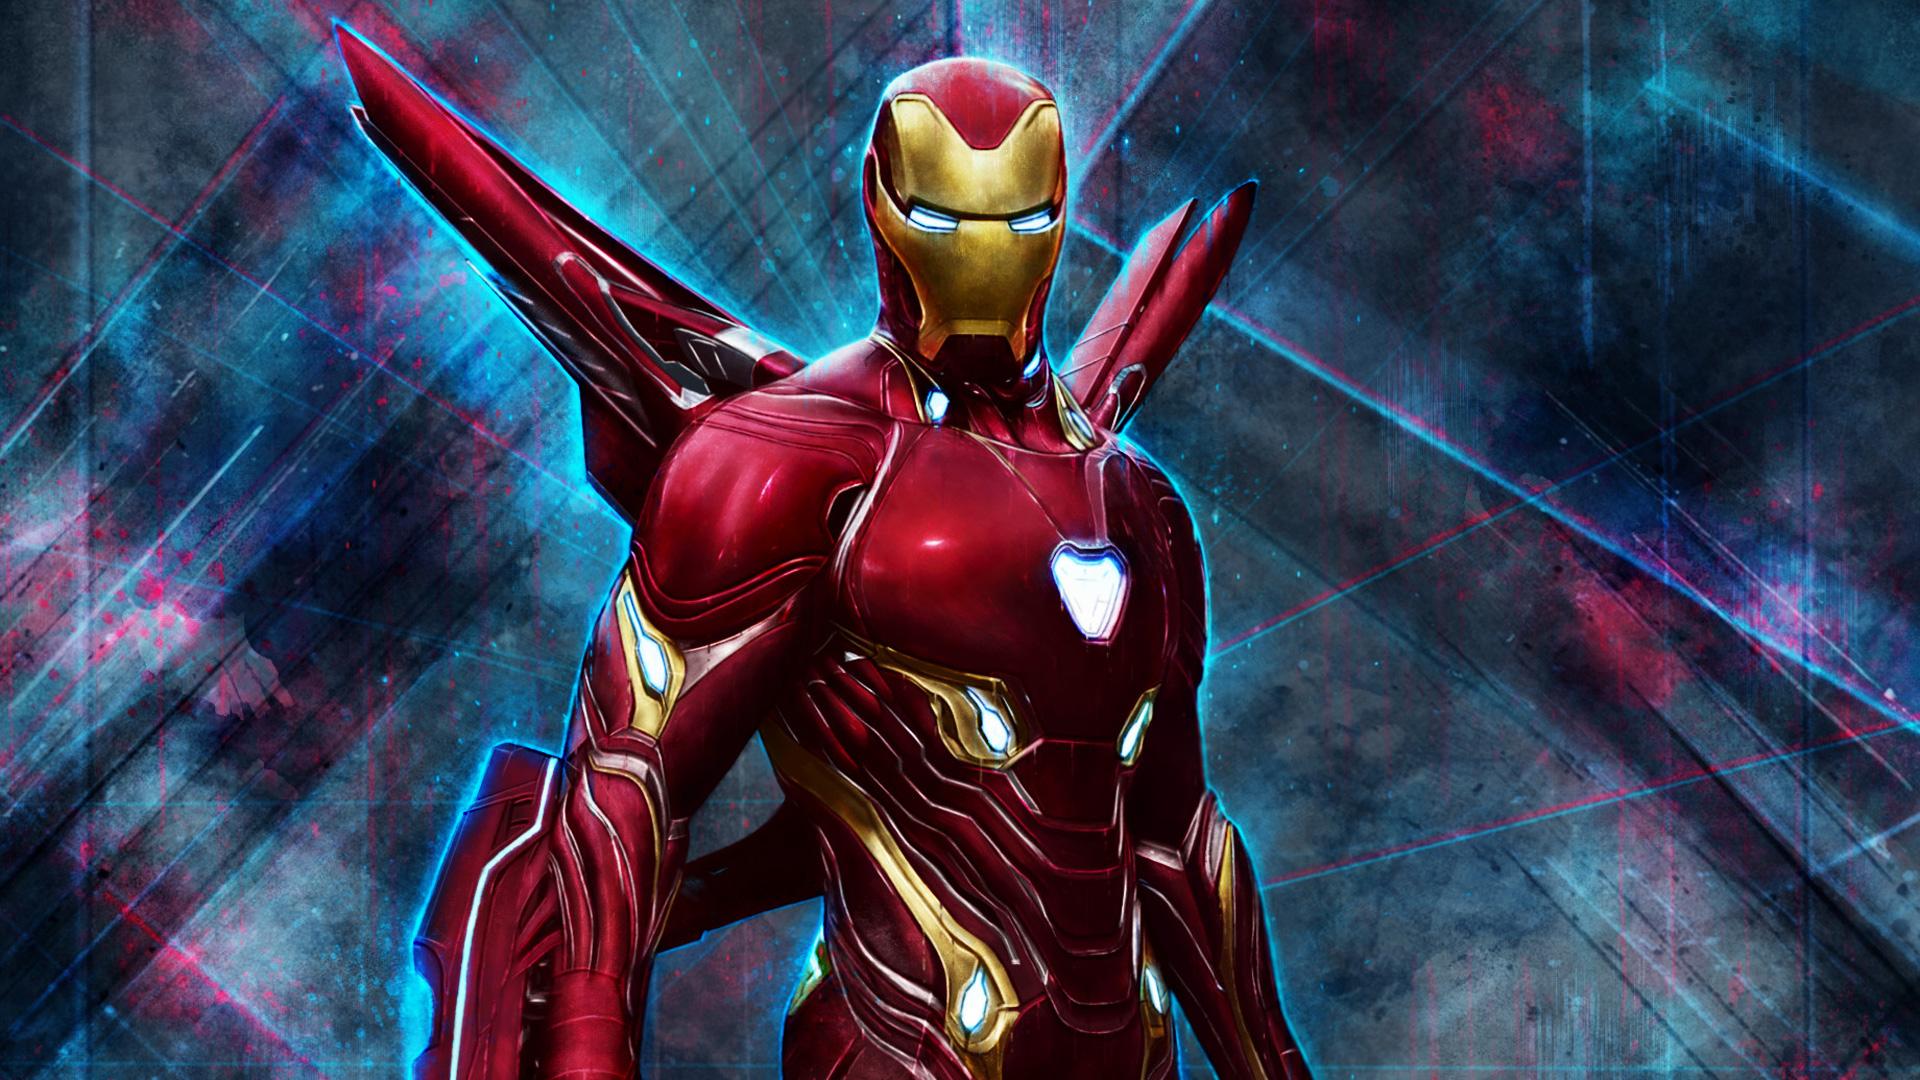 Iron Man Bleeding Edge Armor, HD Superheroes, 4k Wallpaper, Image